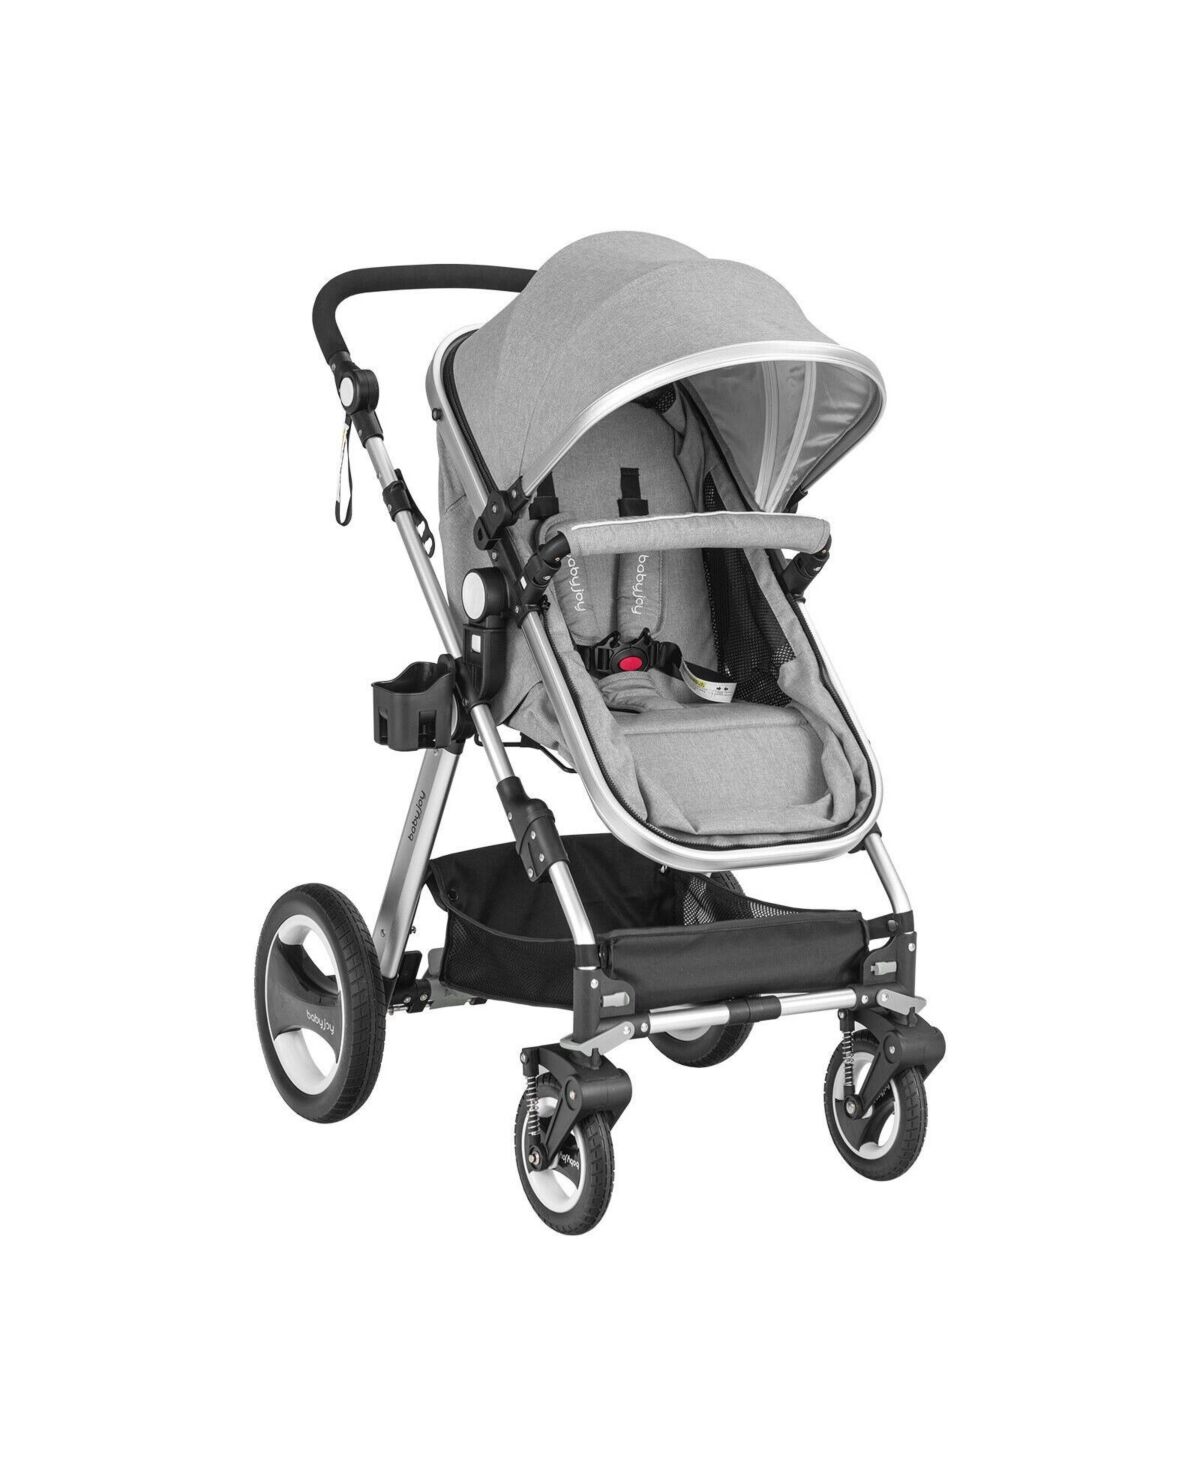 Slickblue Folding Aluminum Baby Stroller Baby Jogger with Diaper Bag - Grey